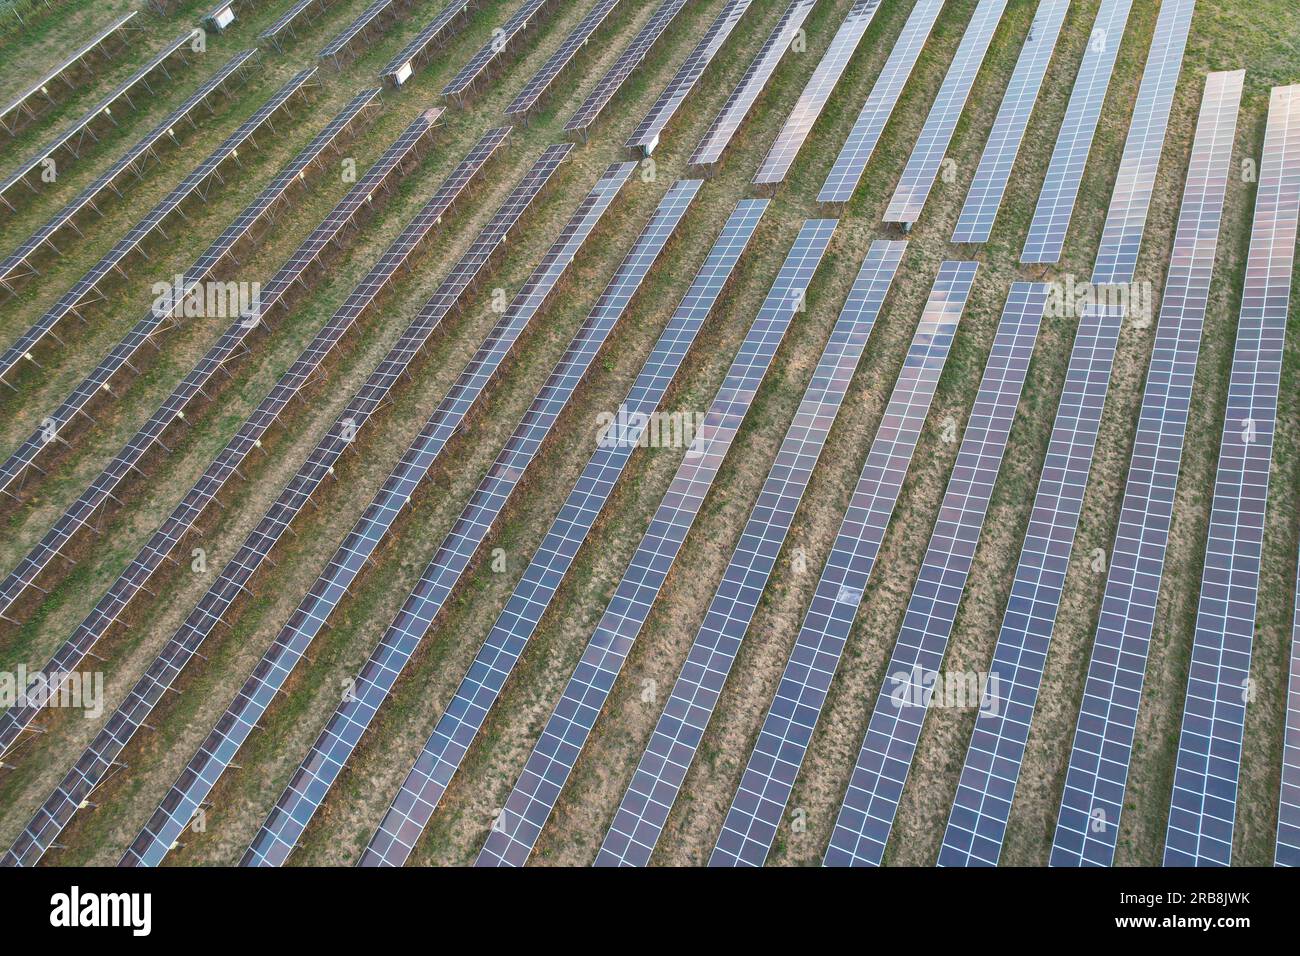 Modernes Solarkraftwerk, Photovoltaik-Paneele grüne Energie Stromerzeugung, neues Kraftwerk, europäische Energiekrise 2022, Green Deal, Tschechische republik Stockfoto